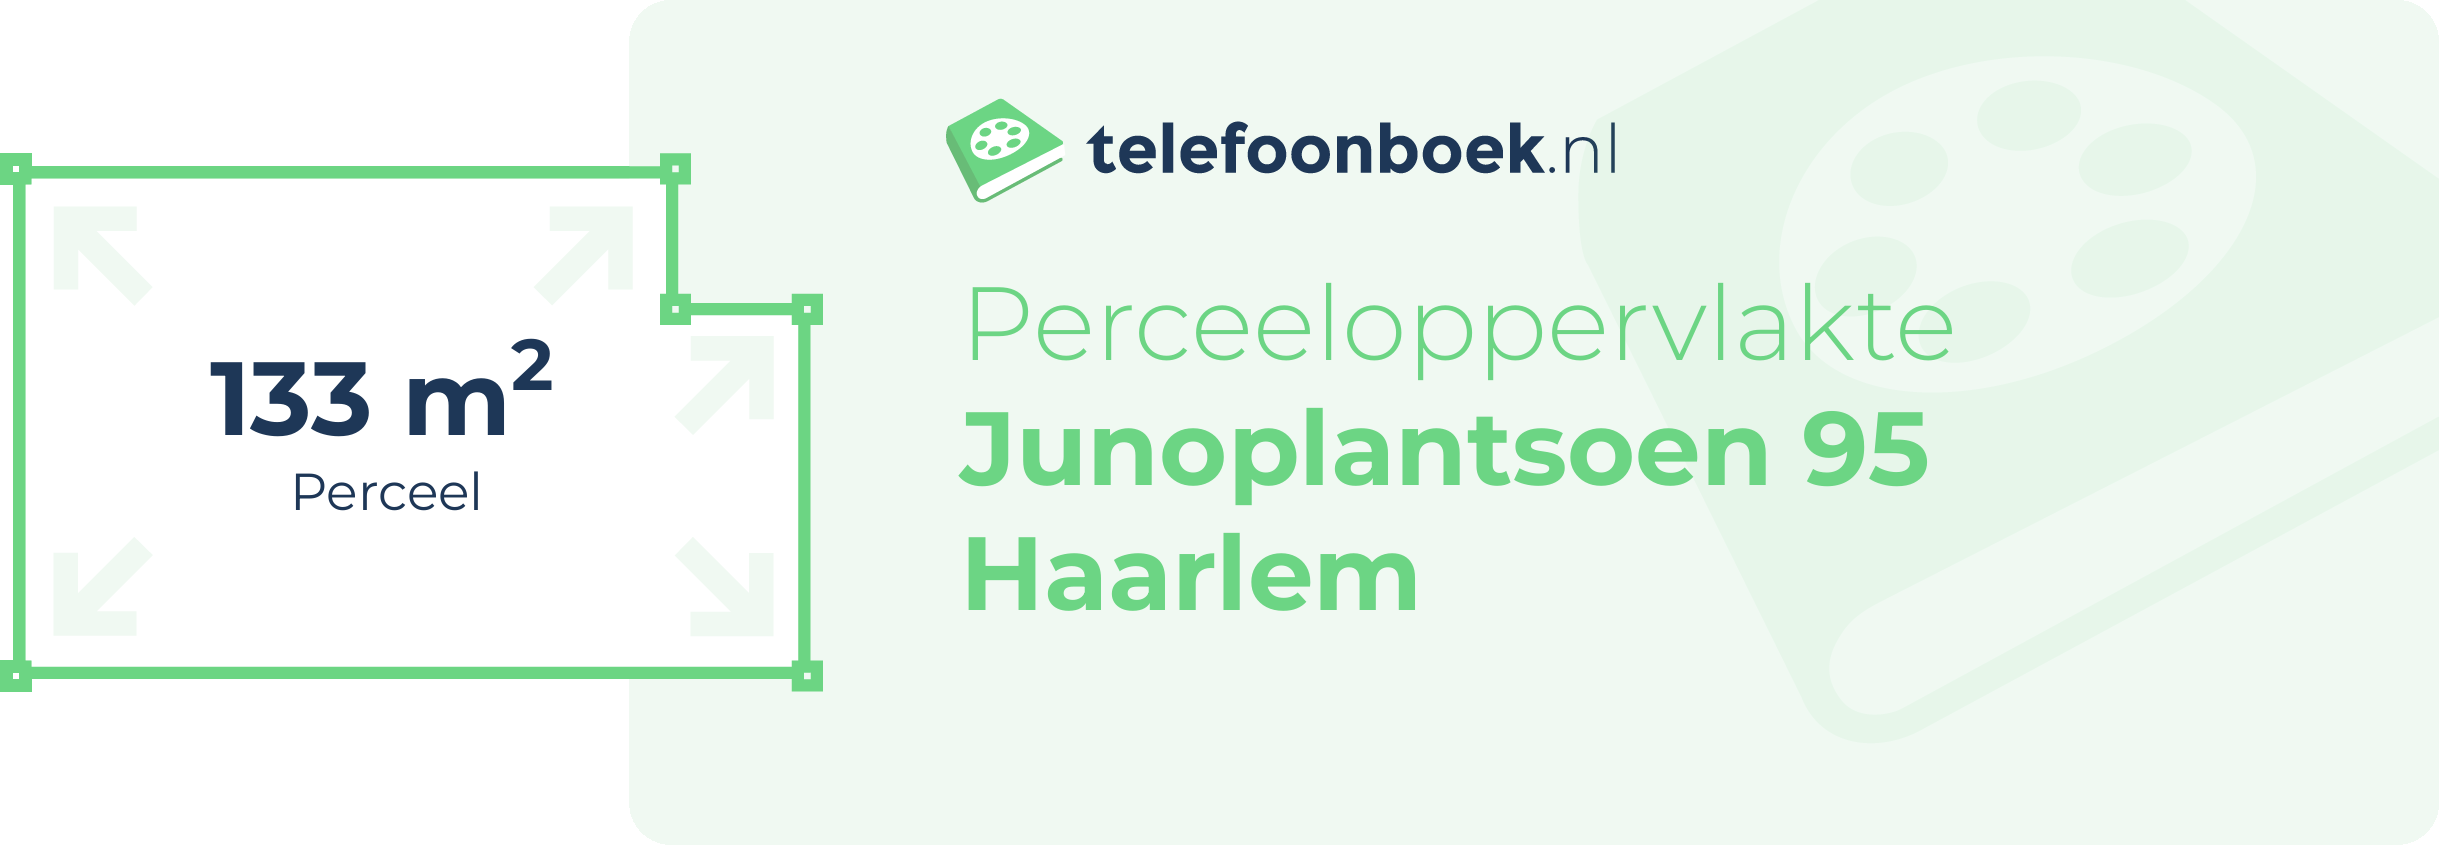 Perceeloppervlakte Junoplantsoen 95 Haarlem